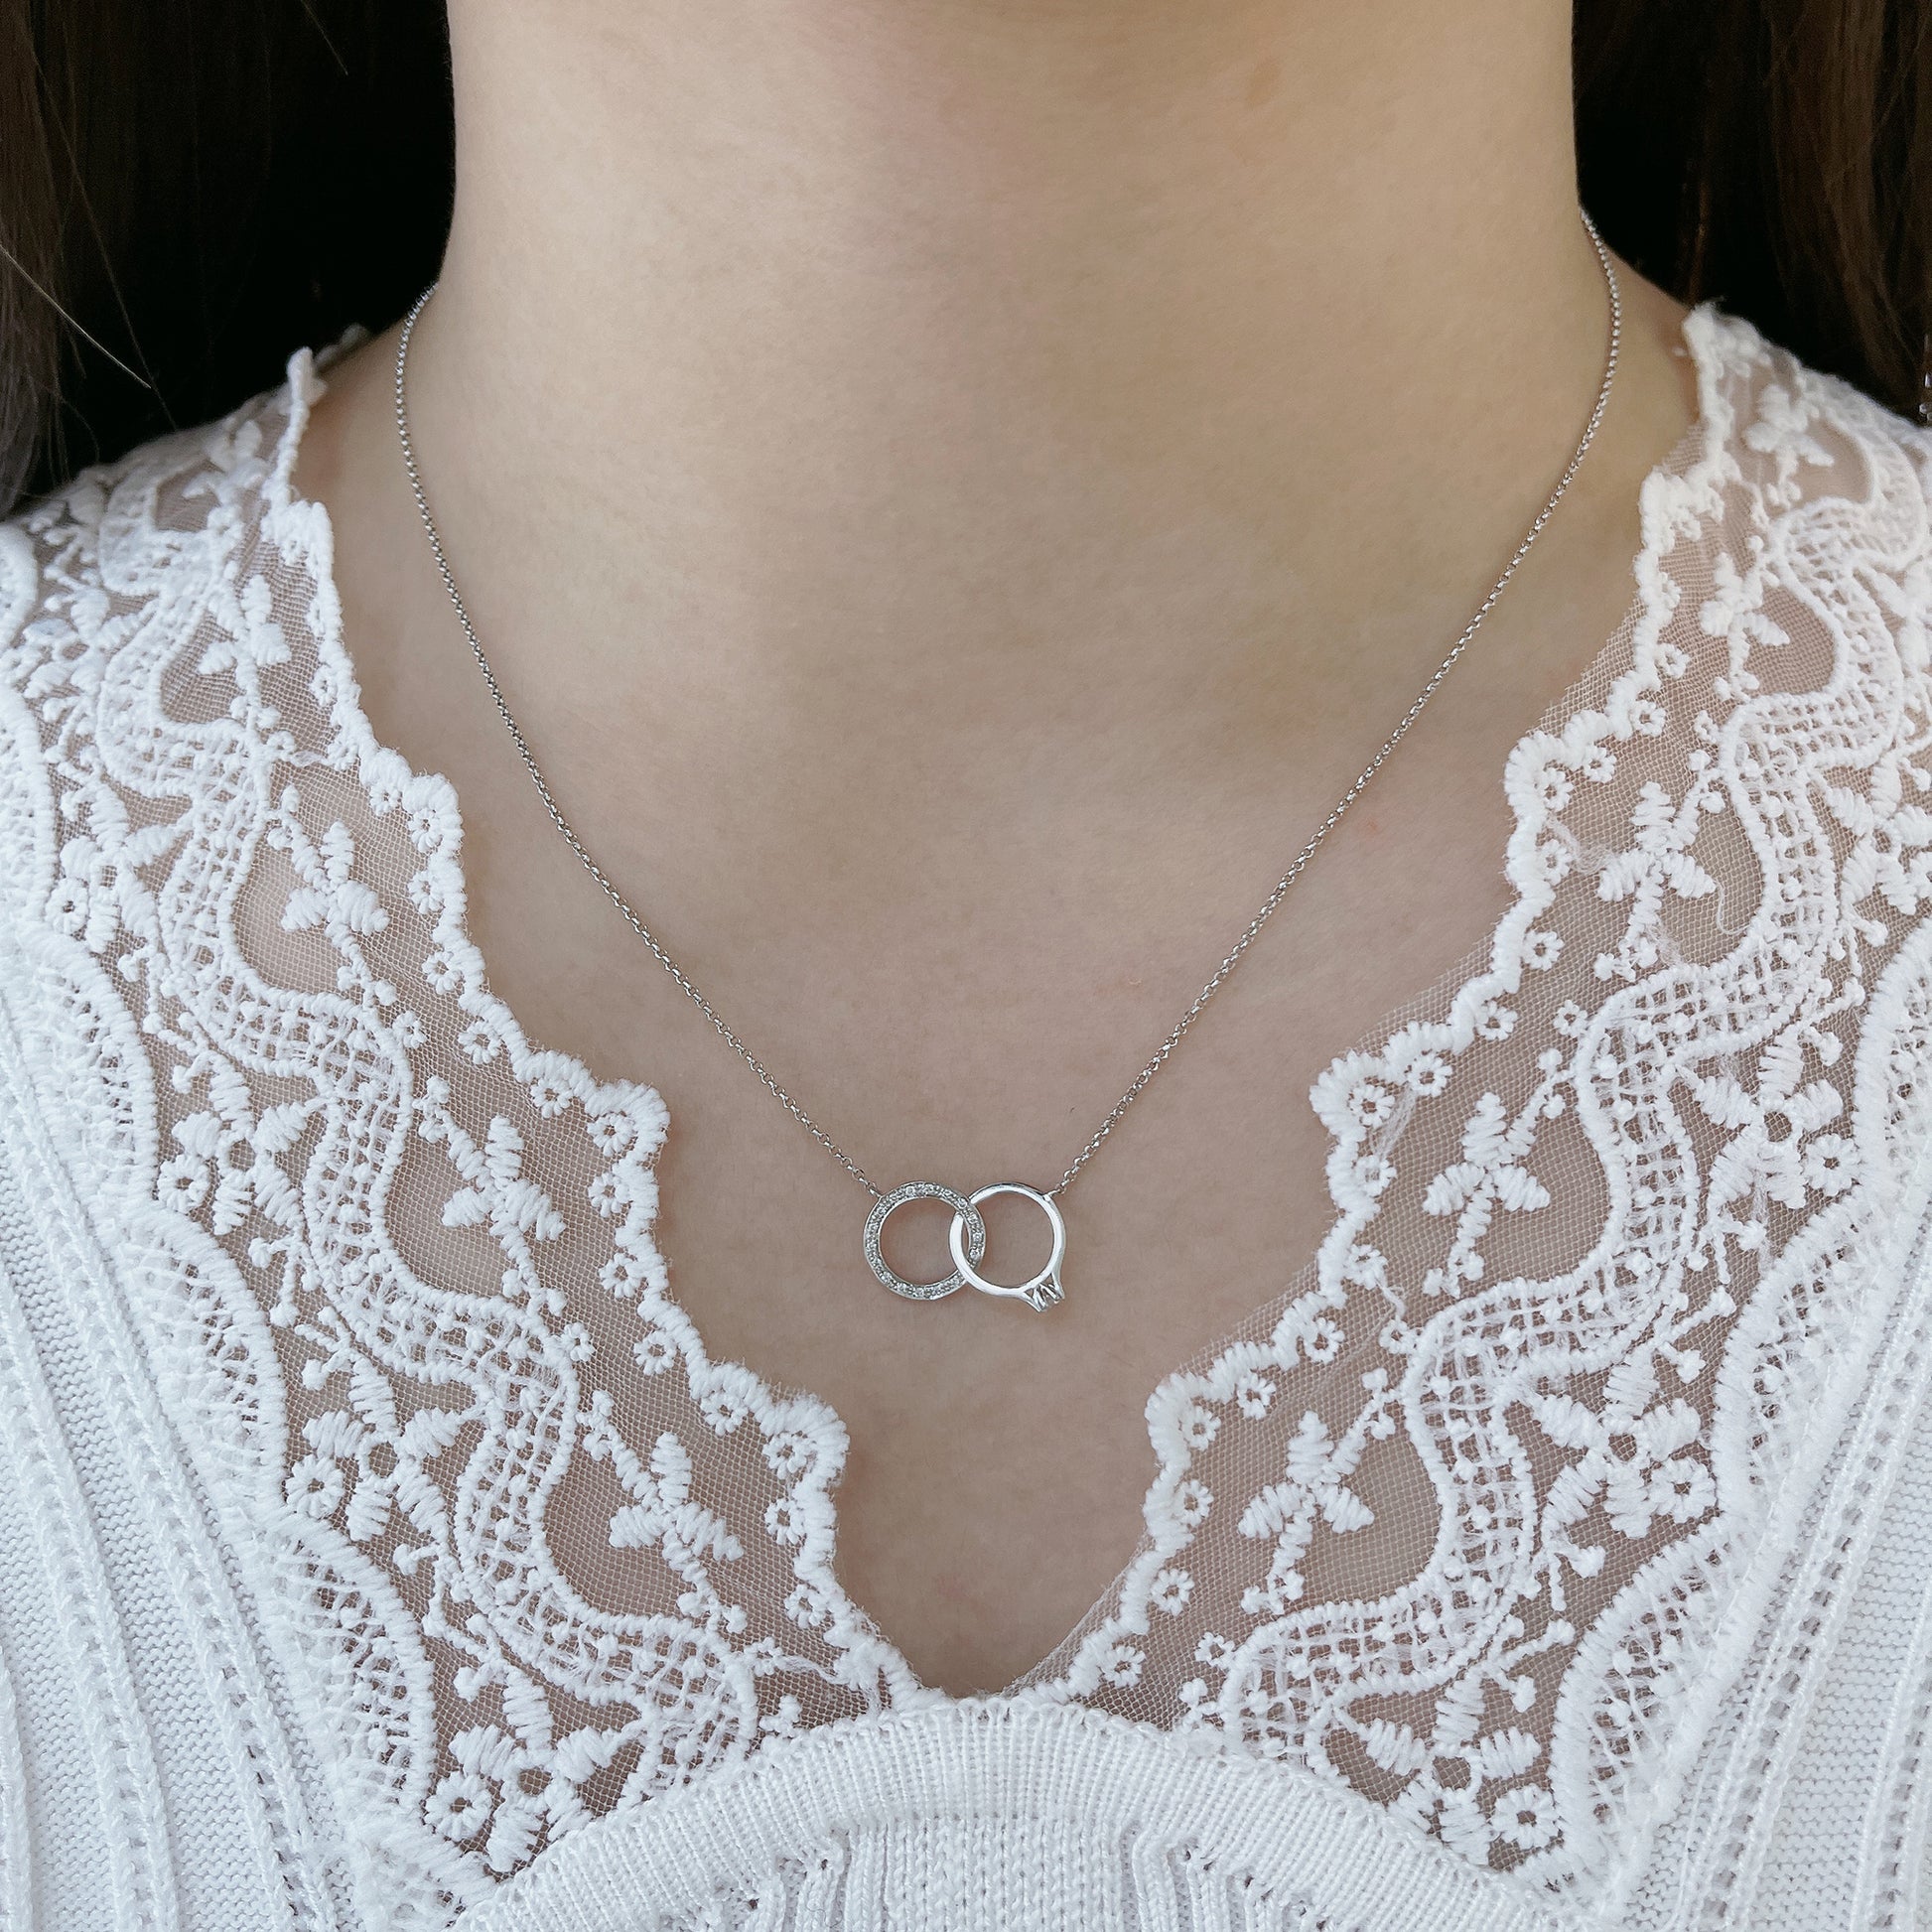 18k白金指環鑽石頸鍊 18k White Gold Ring Design Diamond Necklace